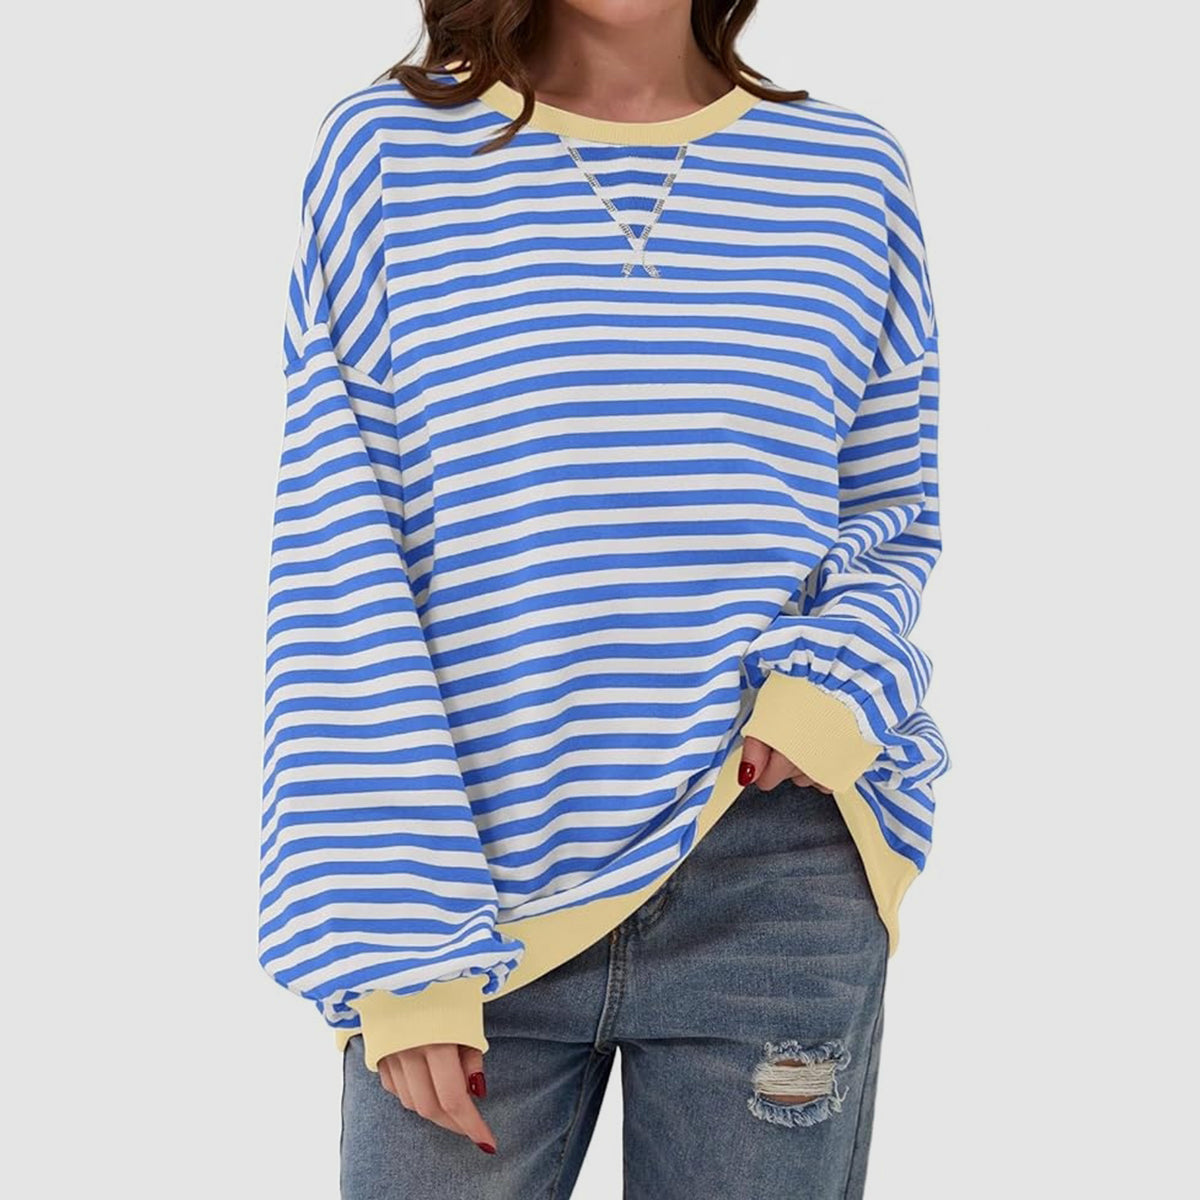 TEEK - Striped Round Neck Long Sleeve Shirt TOPS TEEK Trend Blue S 